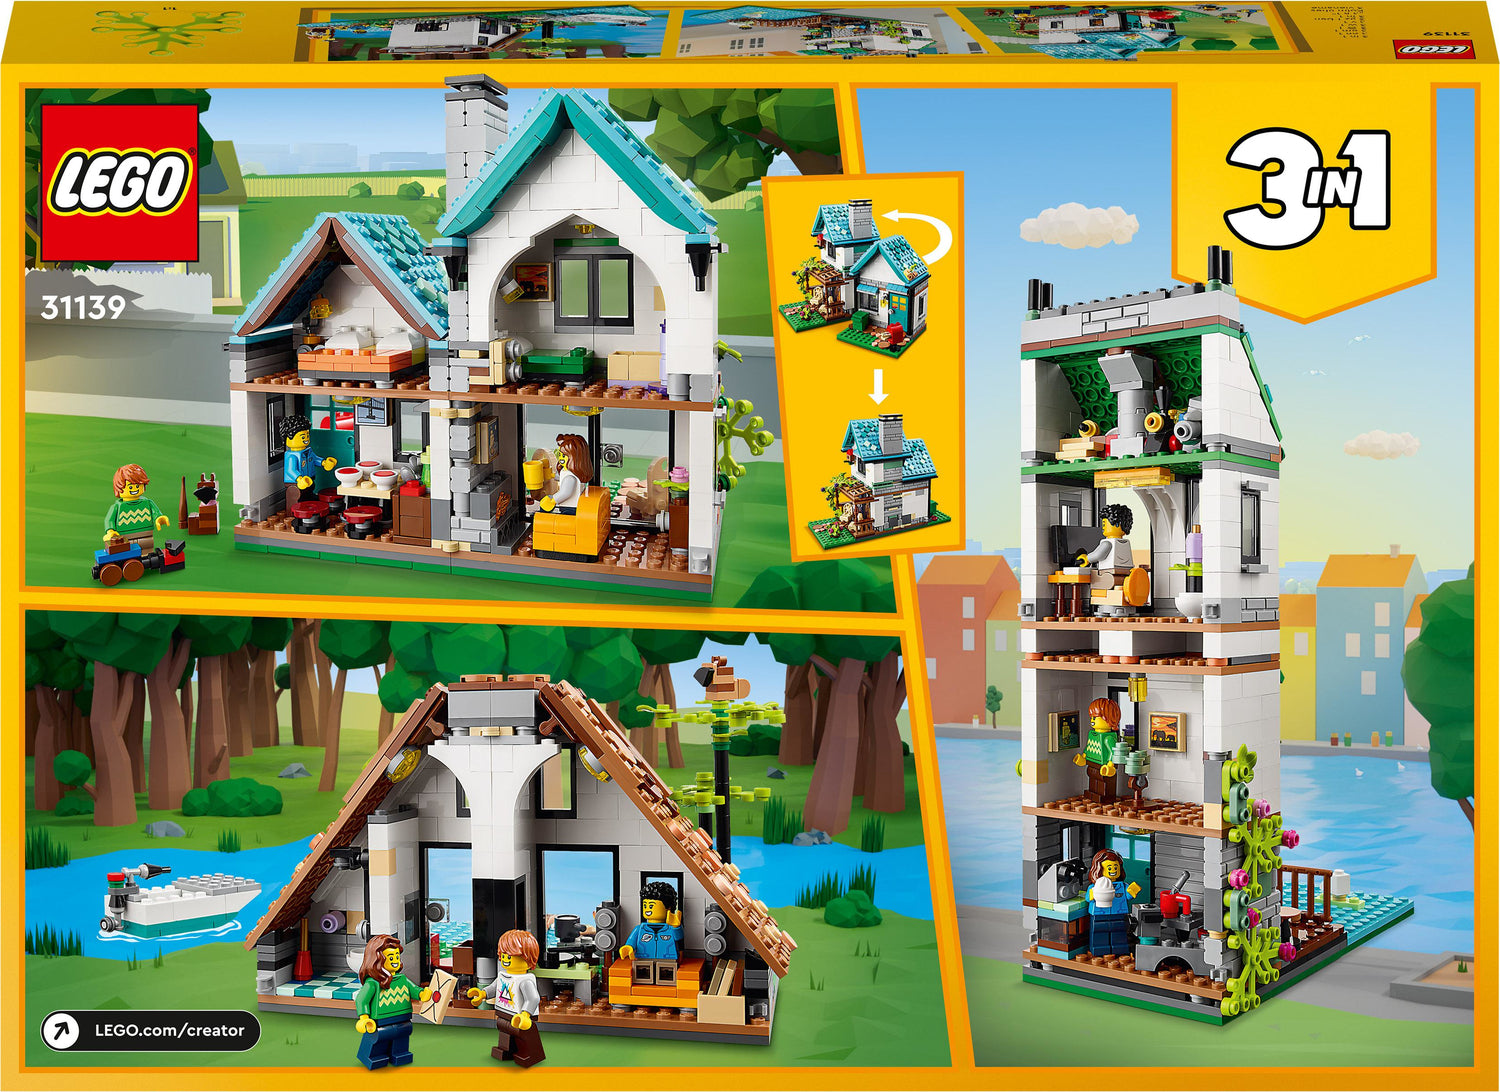 LEGO® Creator 3 in 1 Cozy House